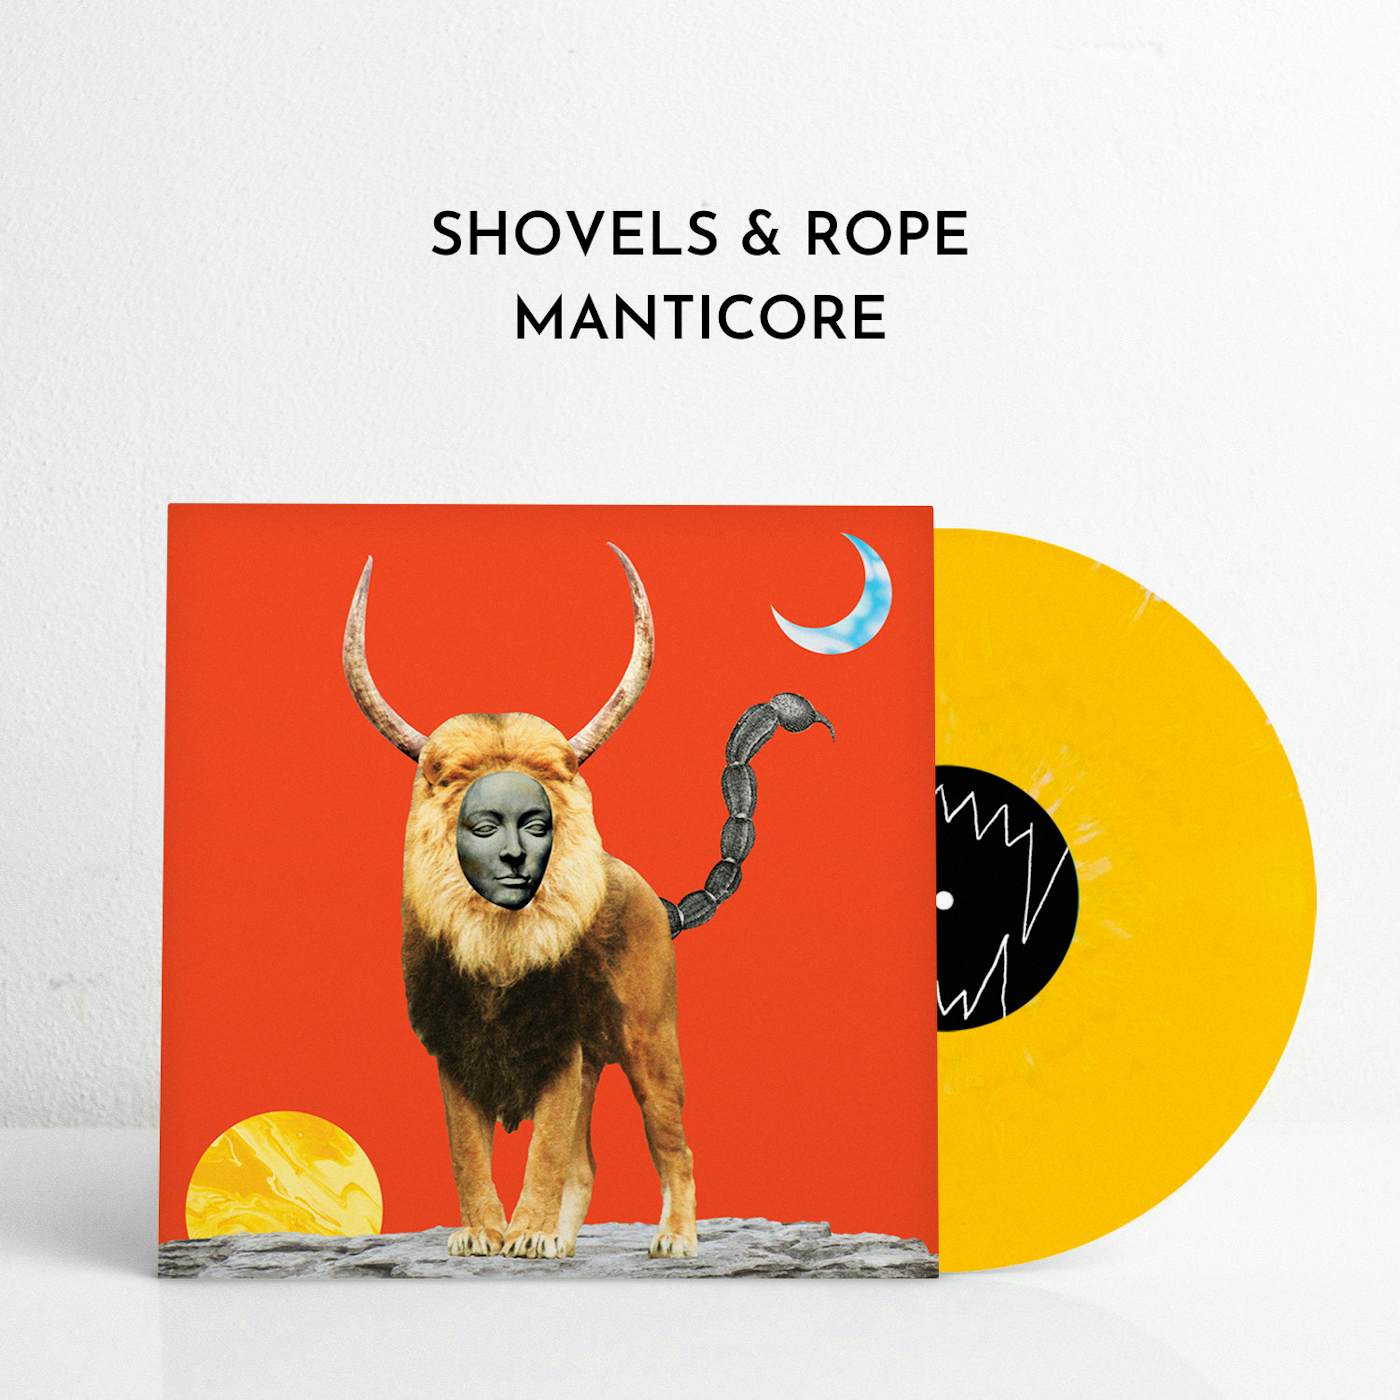 Shovels & Rope Manticore (Limited Edition Vinyl)